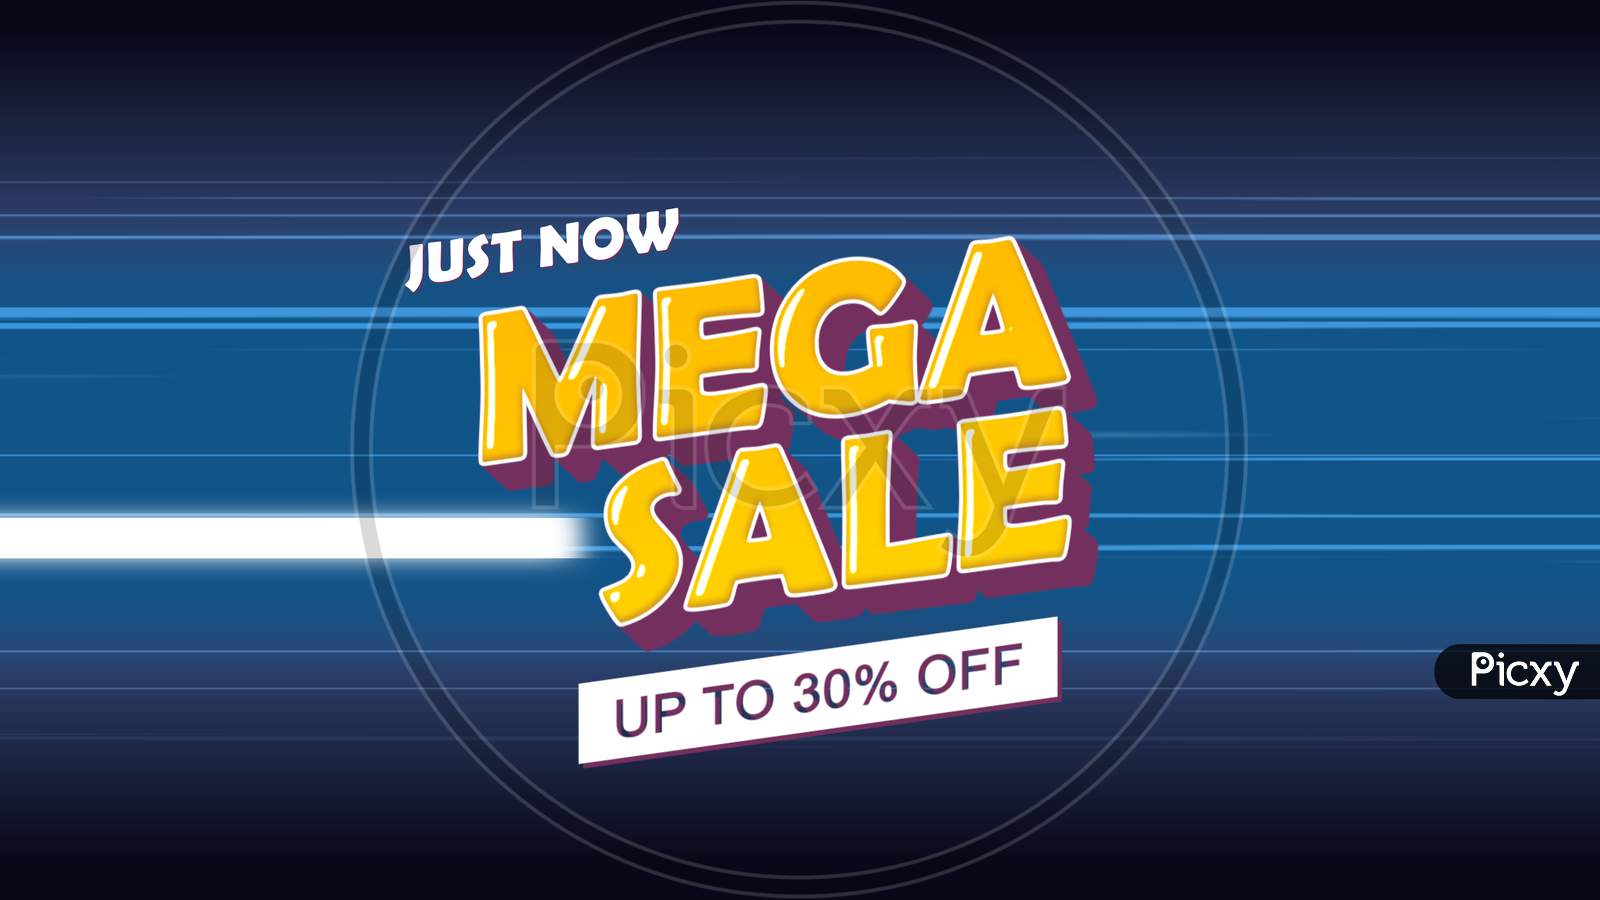 Just Now Mega Sale Up To 30% Off Word Illustration Use For Landing Page,Website, Poster, Banner, Flyer,Sale Promotion,Advertising, Marketing